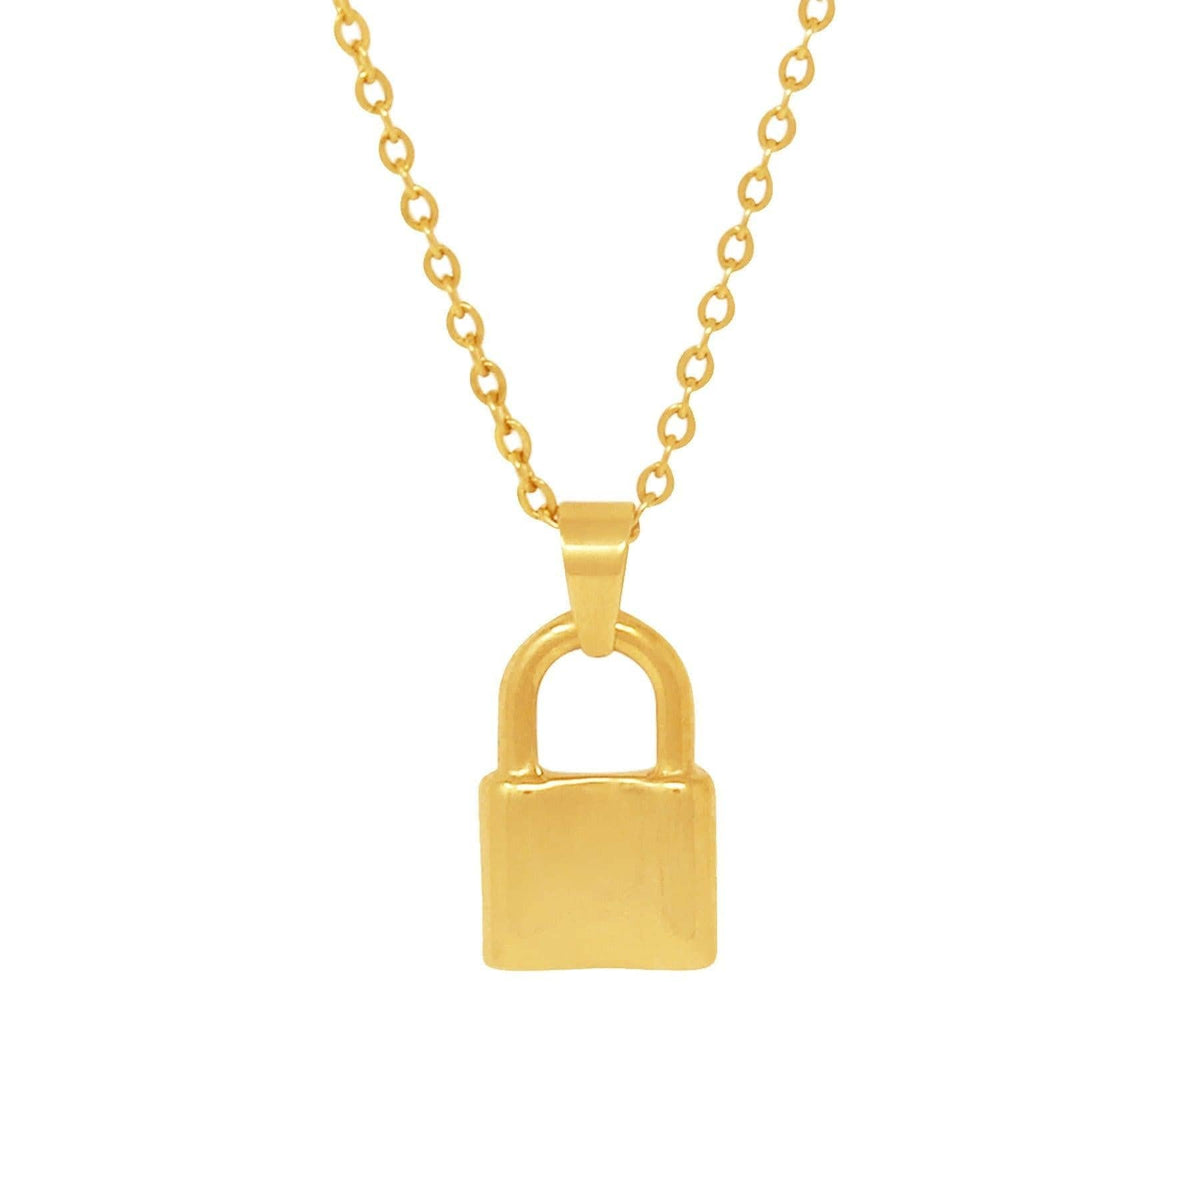 BohoMoon Stainless Steel Padlock Choker / Necklace Gold / Choker